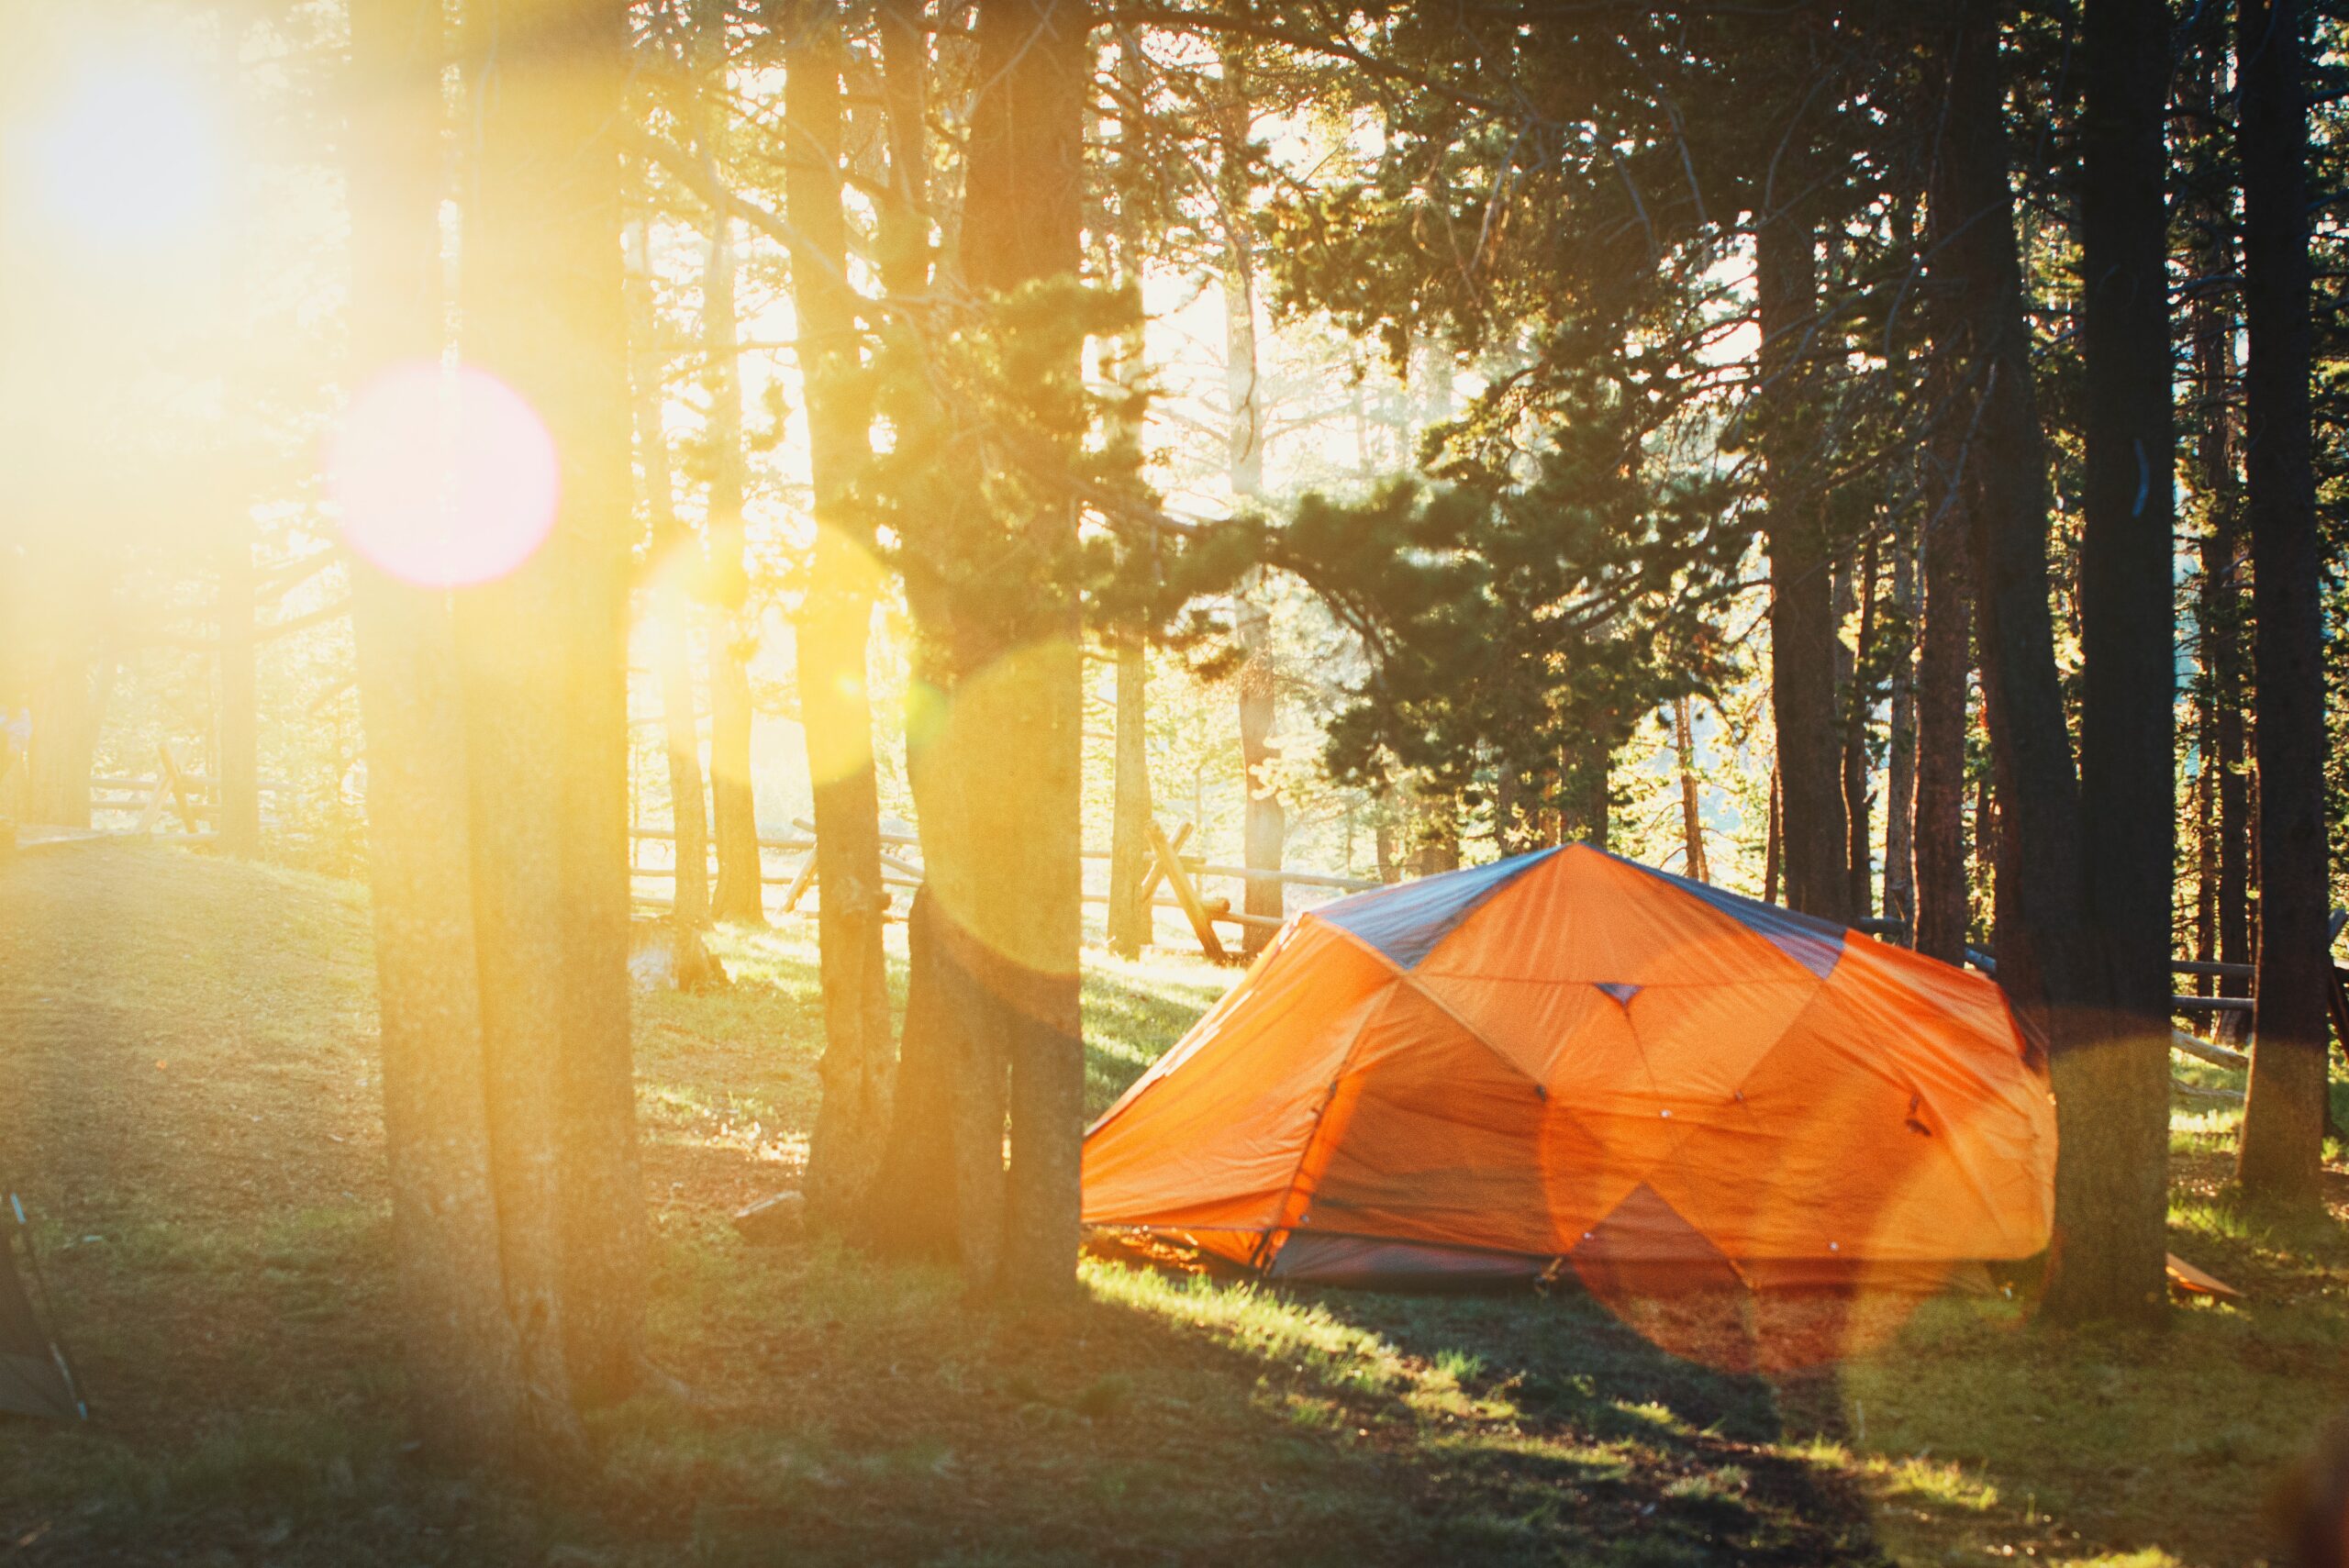 Orange tent in forest